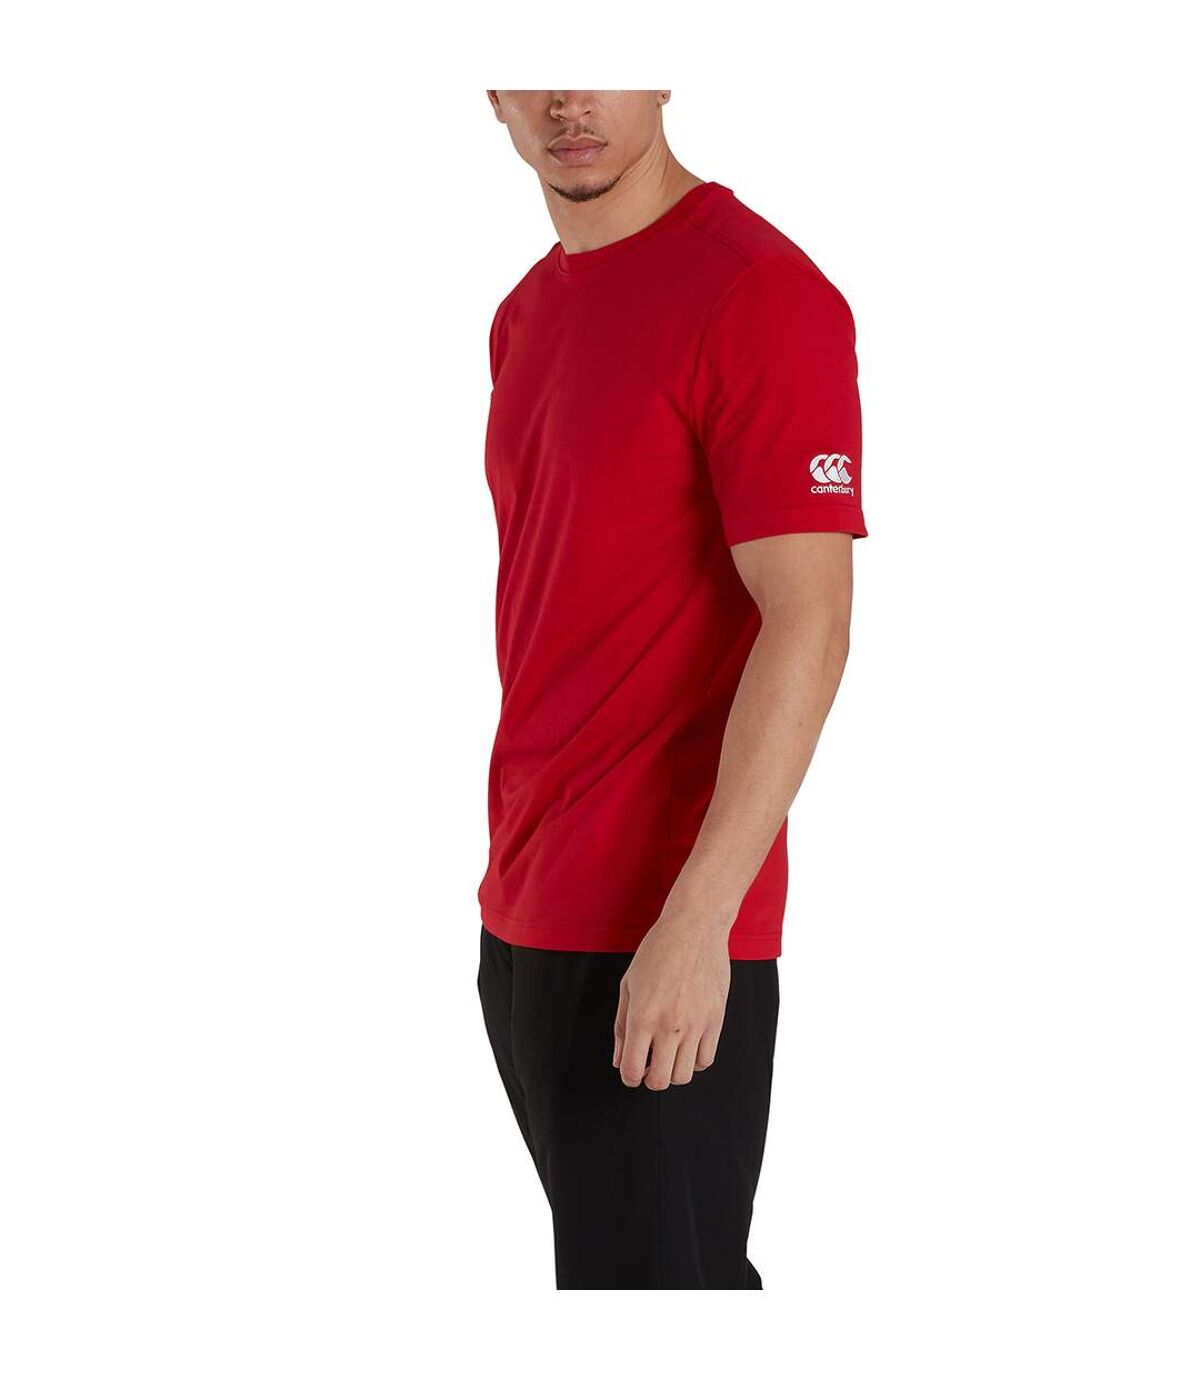 Canterbury - T-shirt CLUB - Adulte (Rouge) - UTPC4372